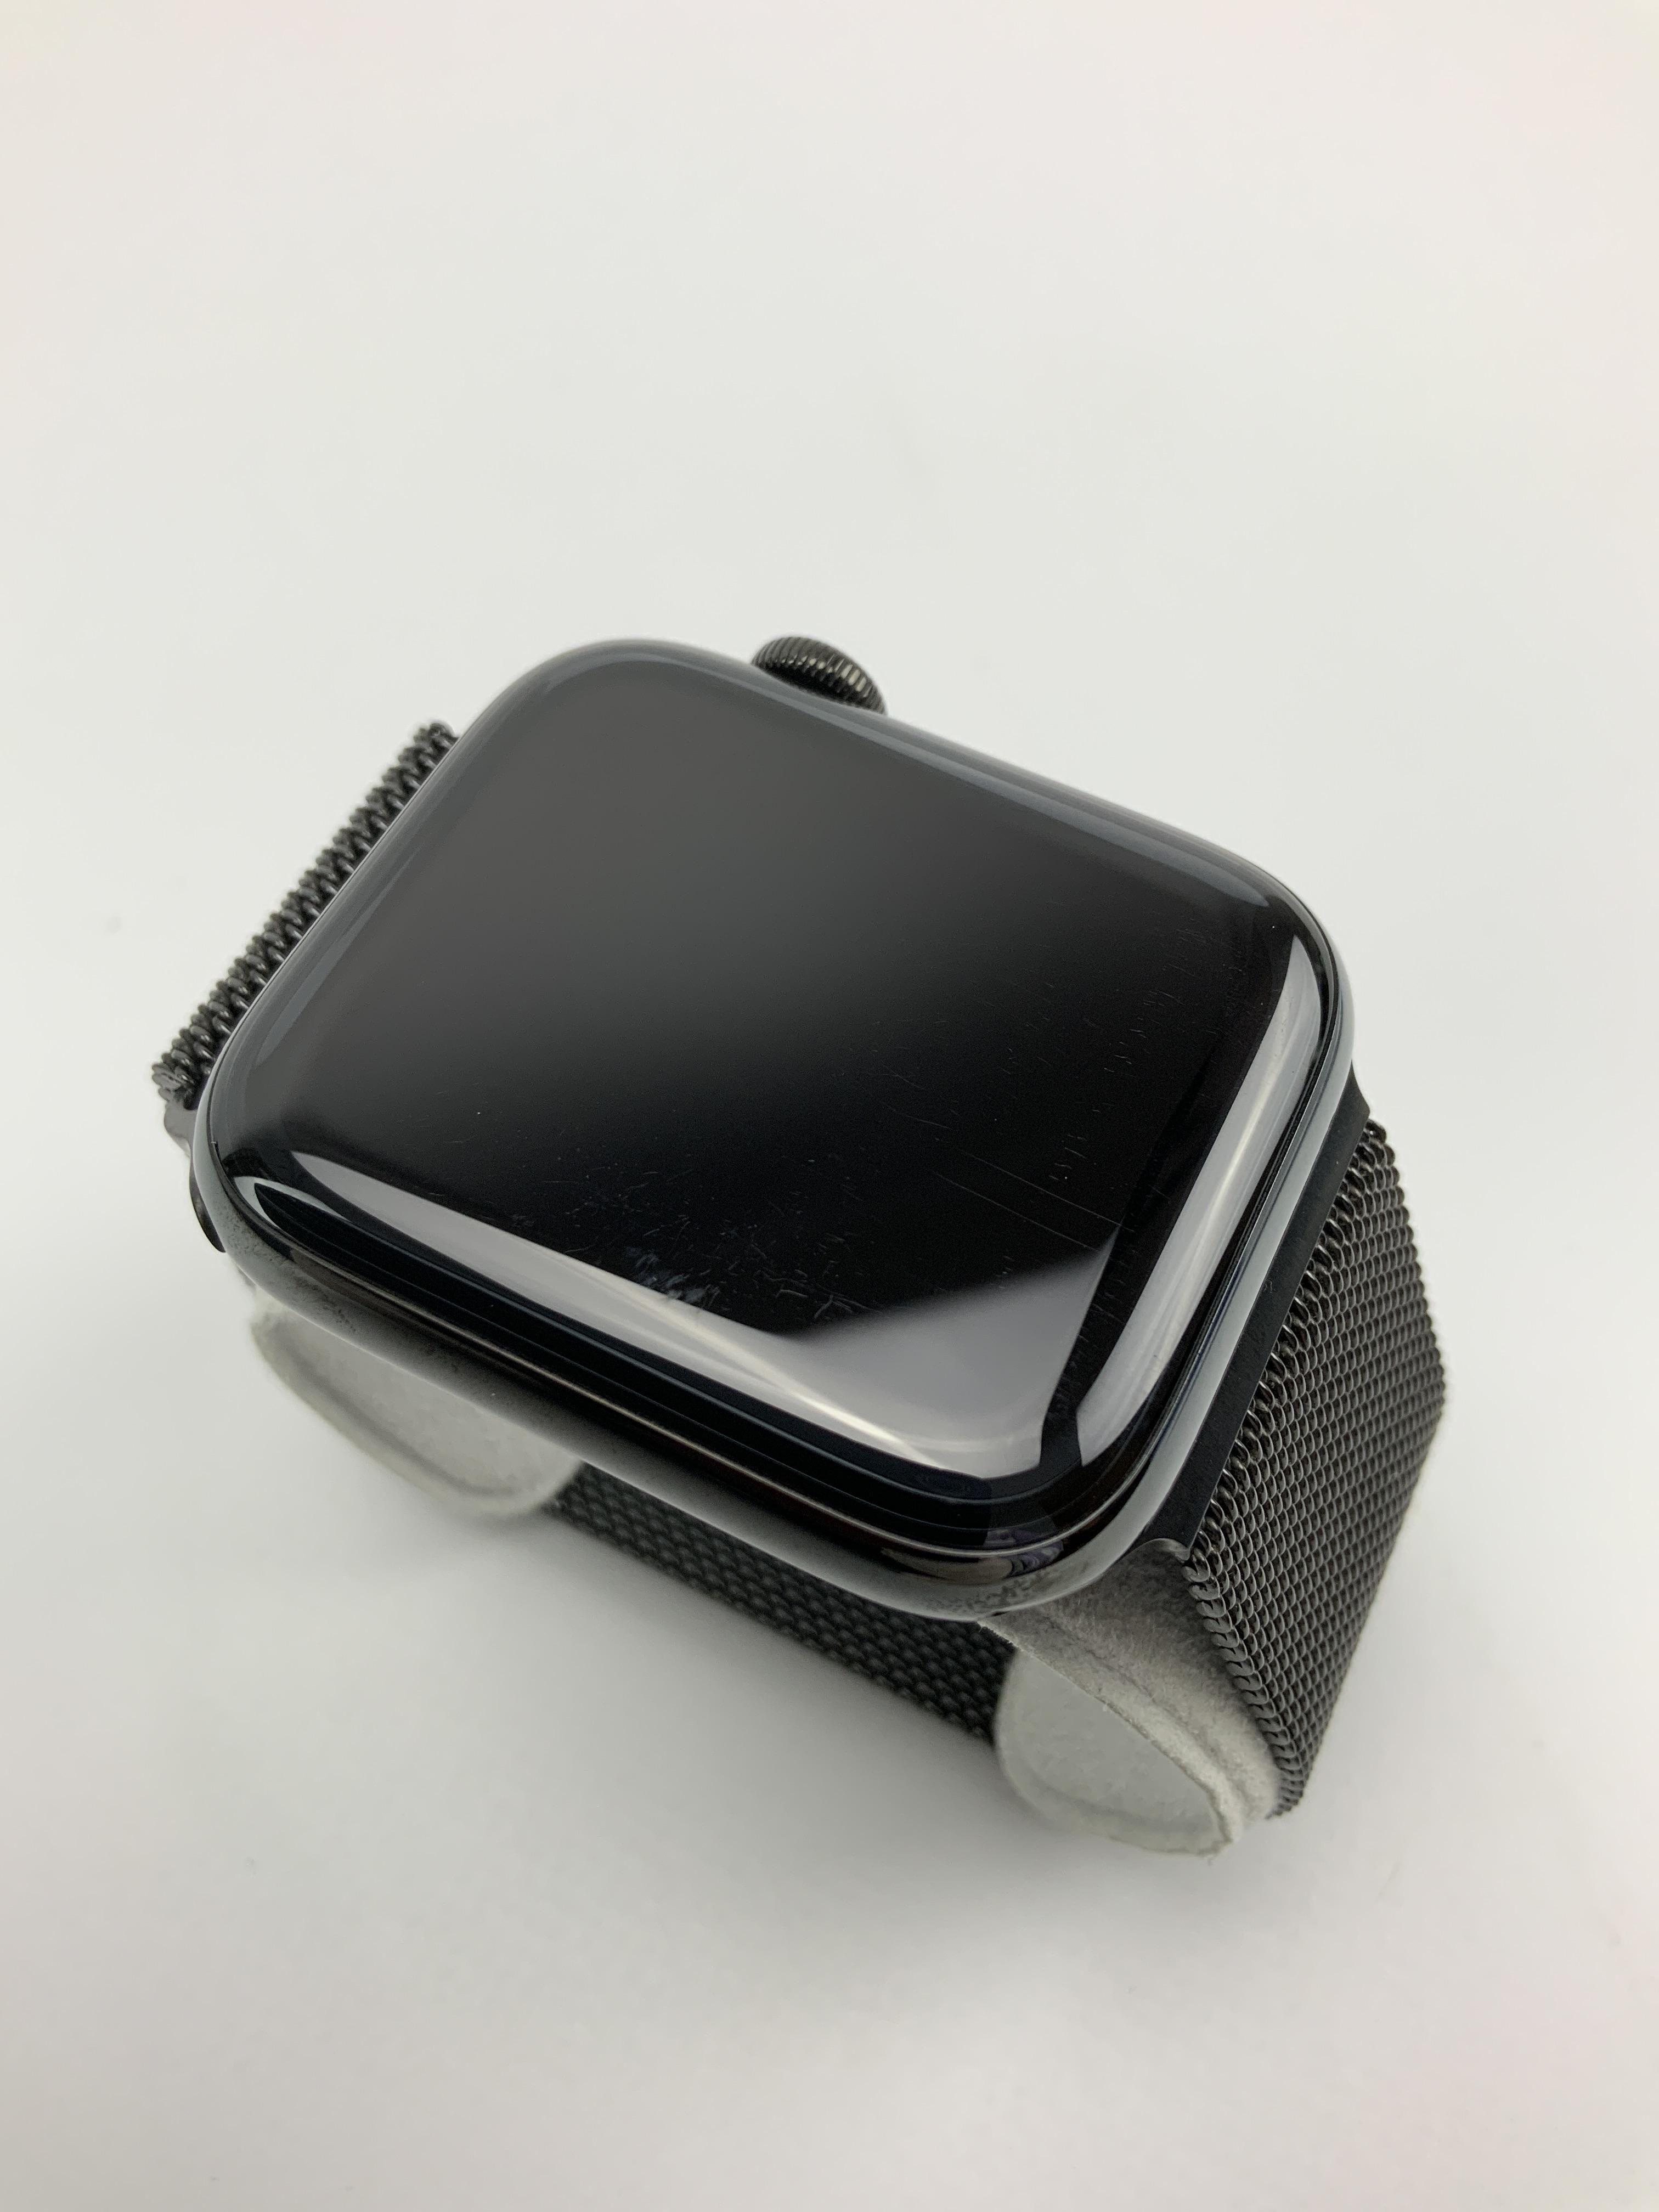 Watch Series 5 Steel Cellular (44mm), Space Black, imagen 3